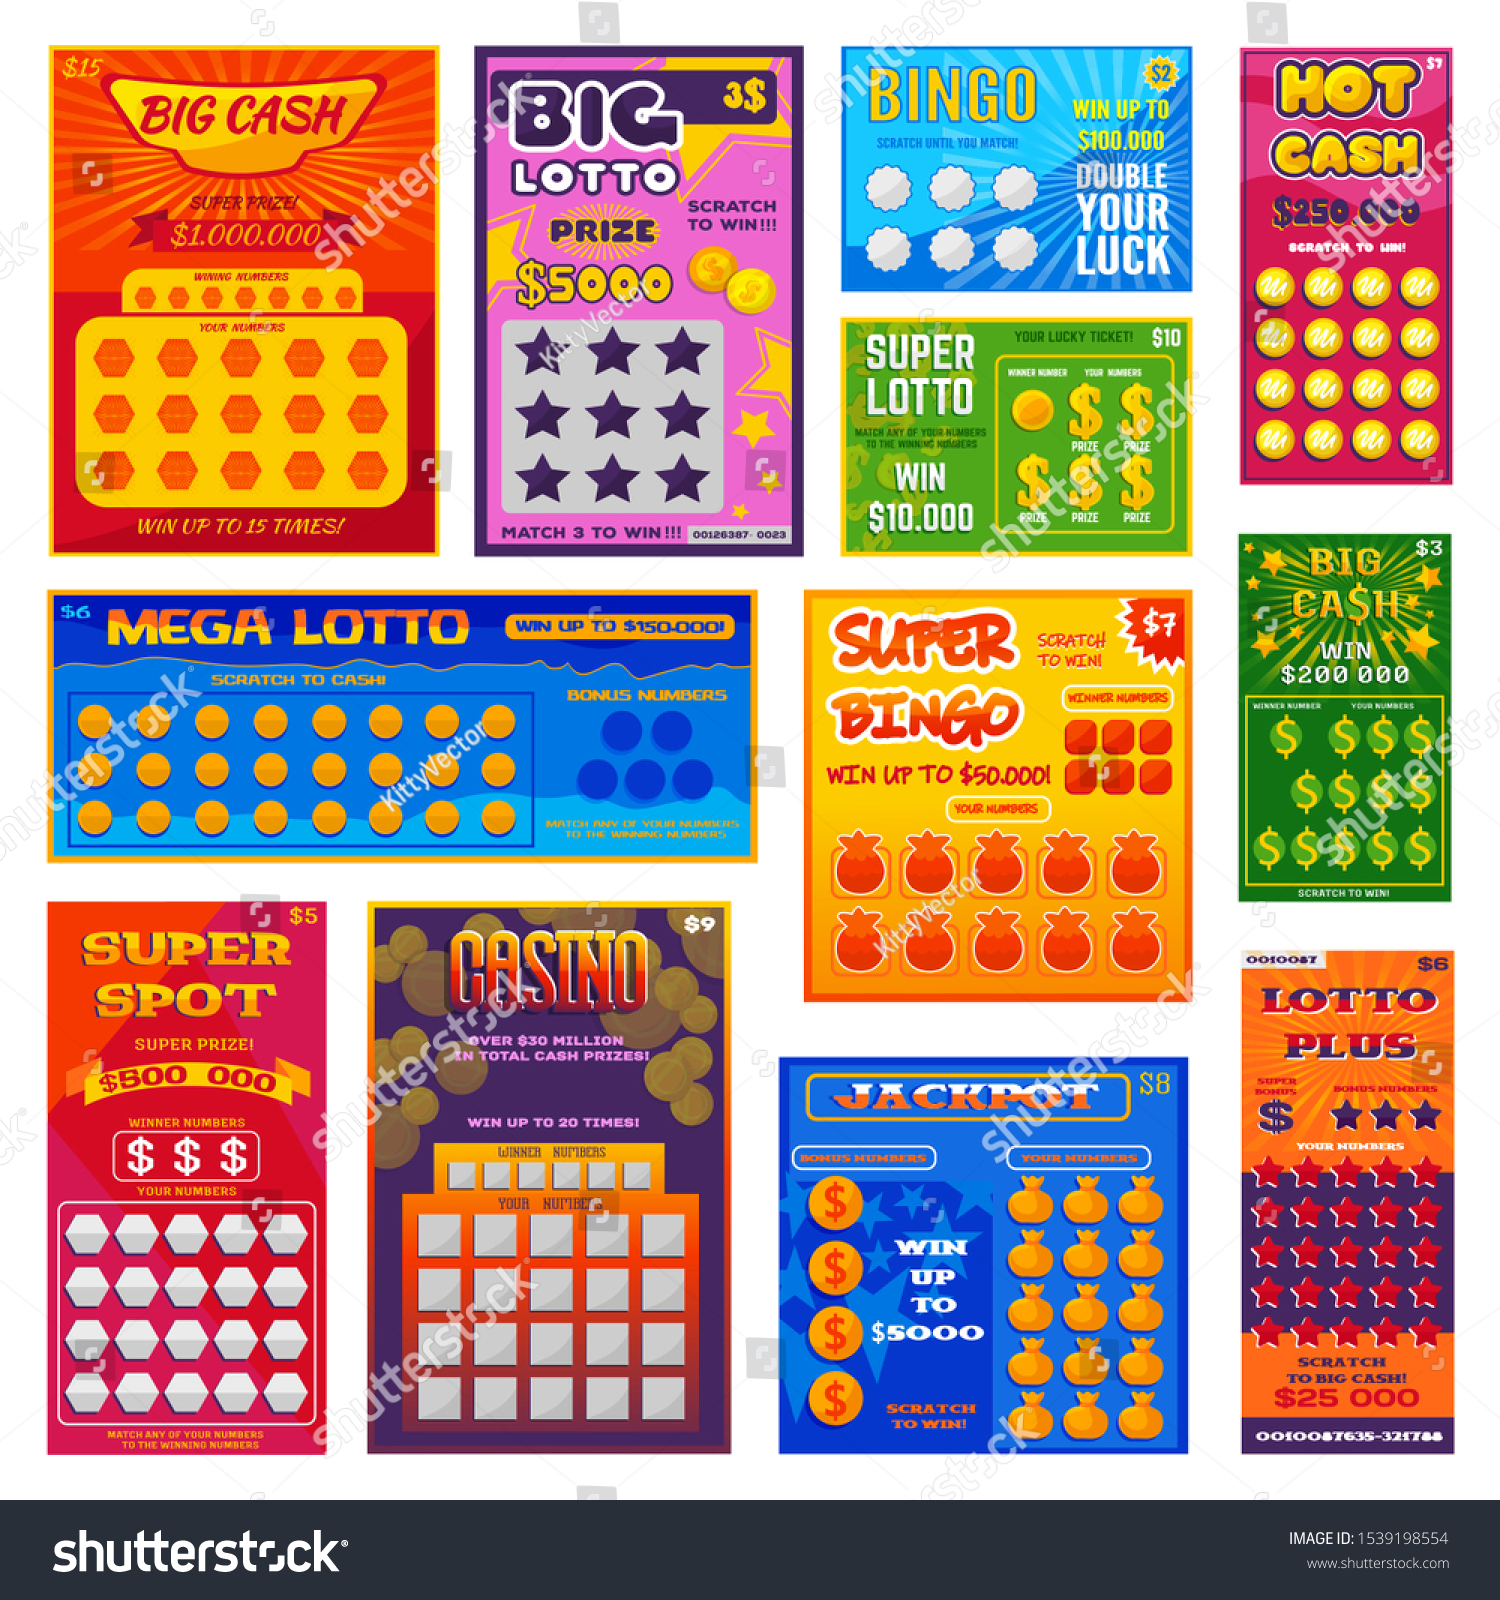 Bingo x 10 lottery tickets